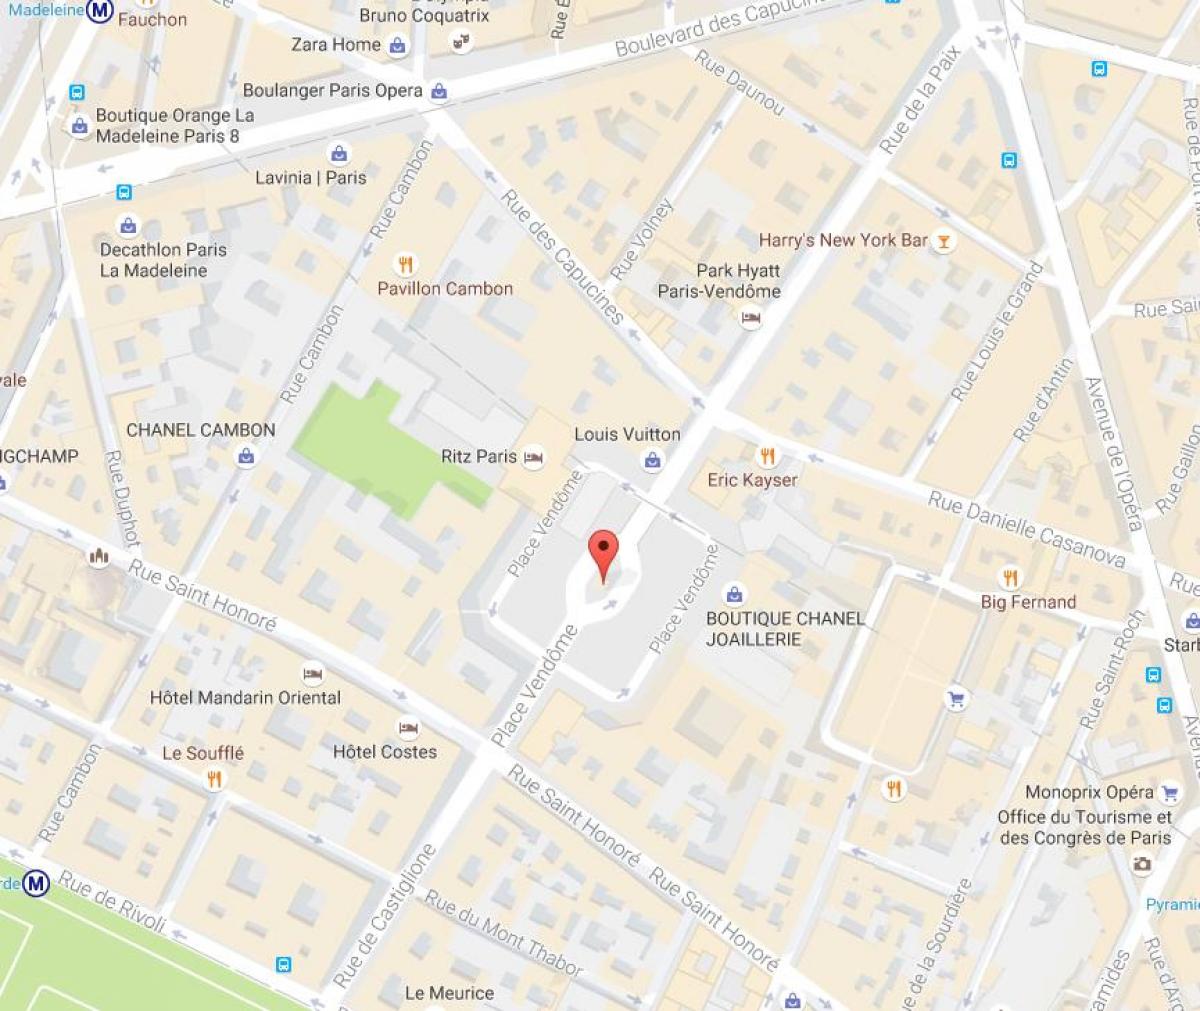 Map of The Place Vendôme